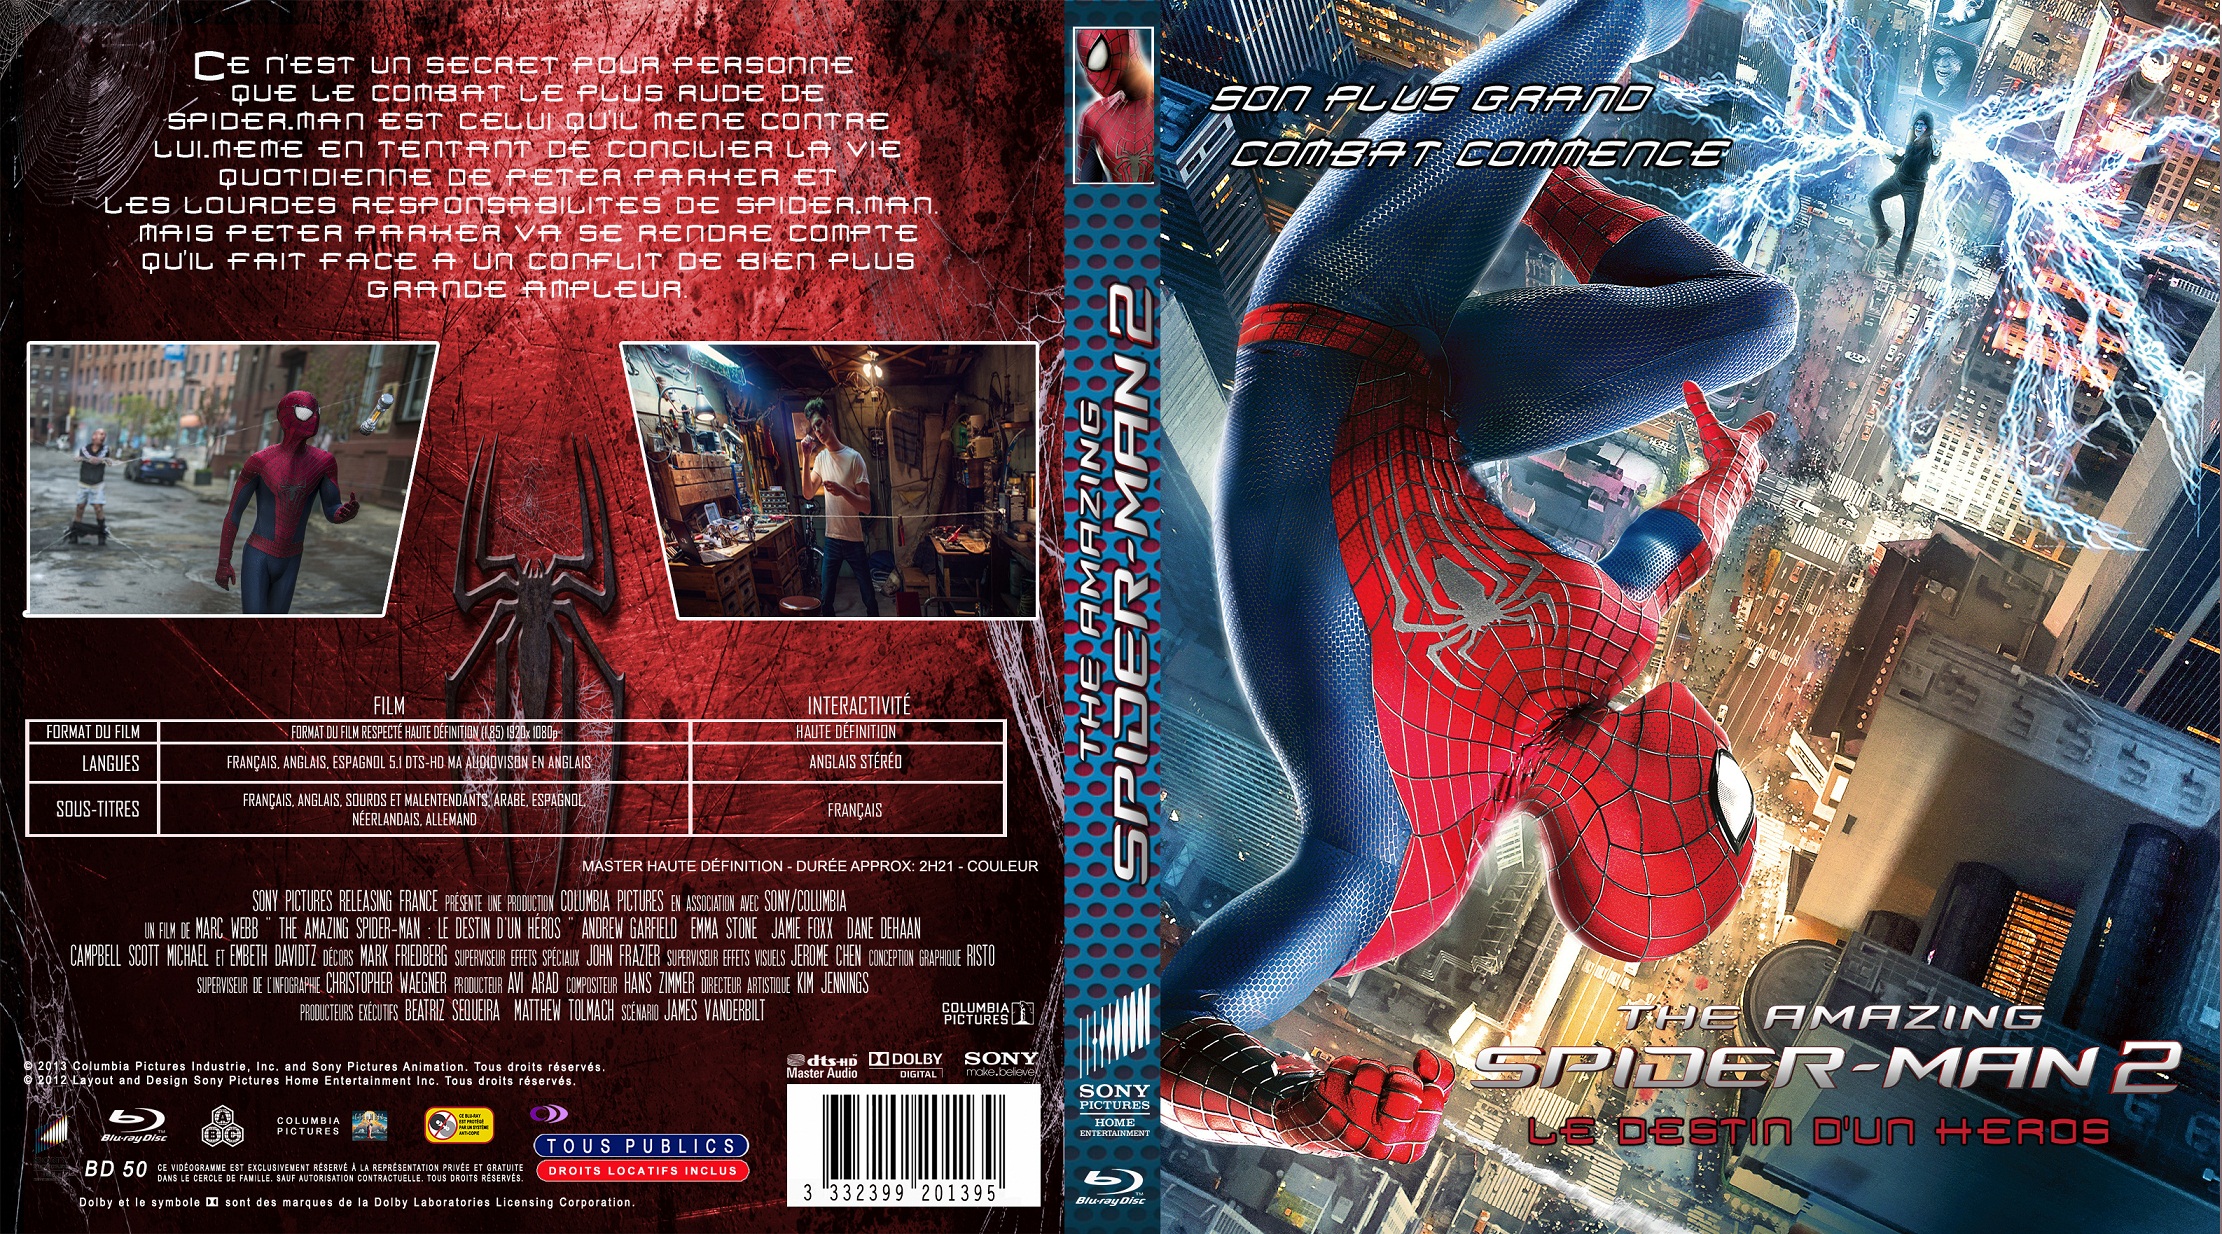 Человек паук 2 музыка. Spider-man 2 DVD Cover. Новый диск Spider man 2. The amazing Spider-man 2 DVD Cover. Игра новый человек паук 2 обложка.